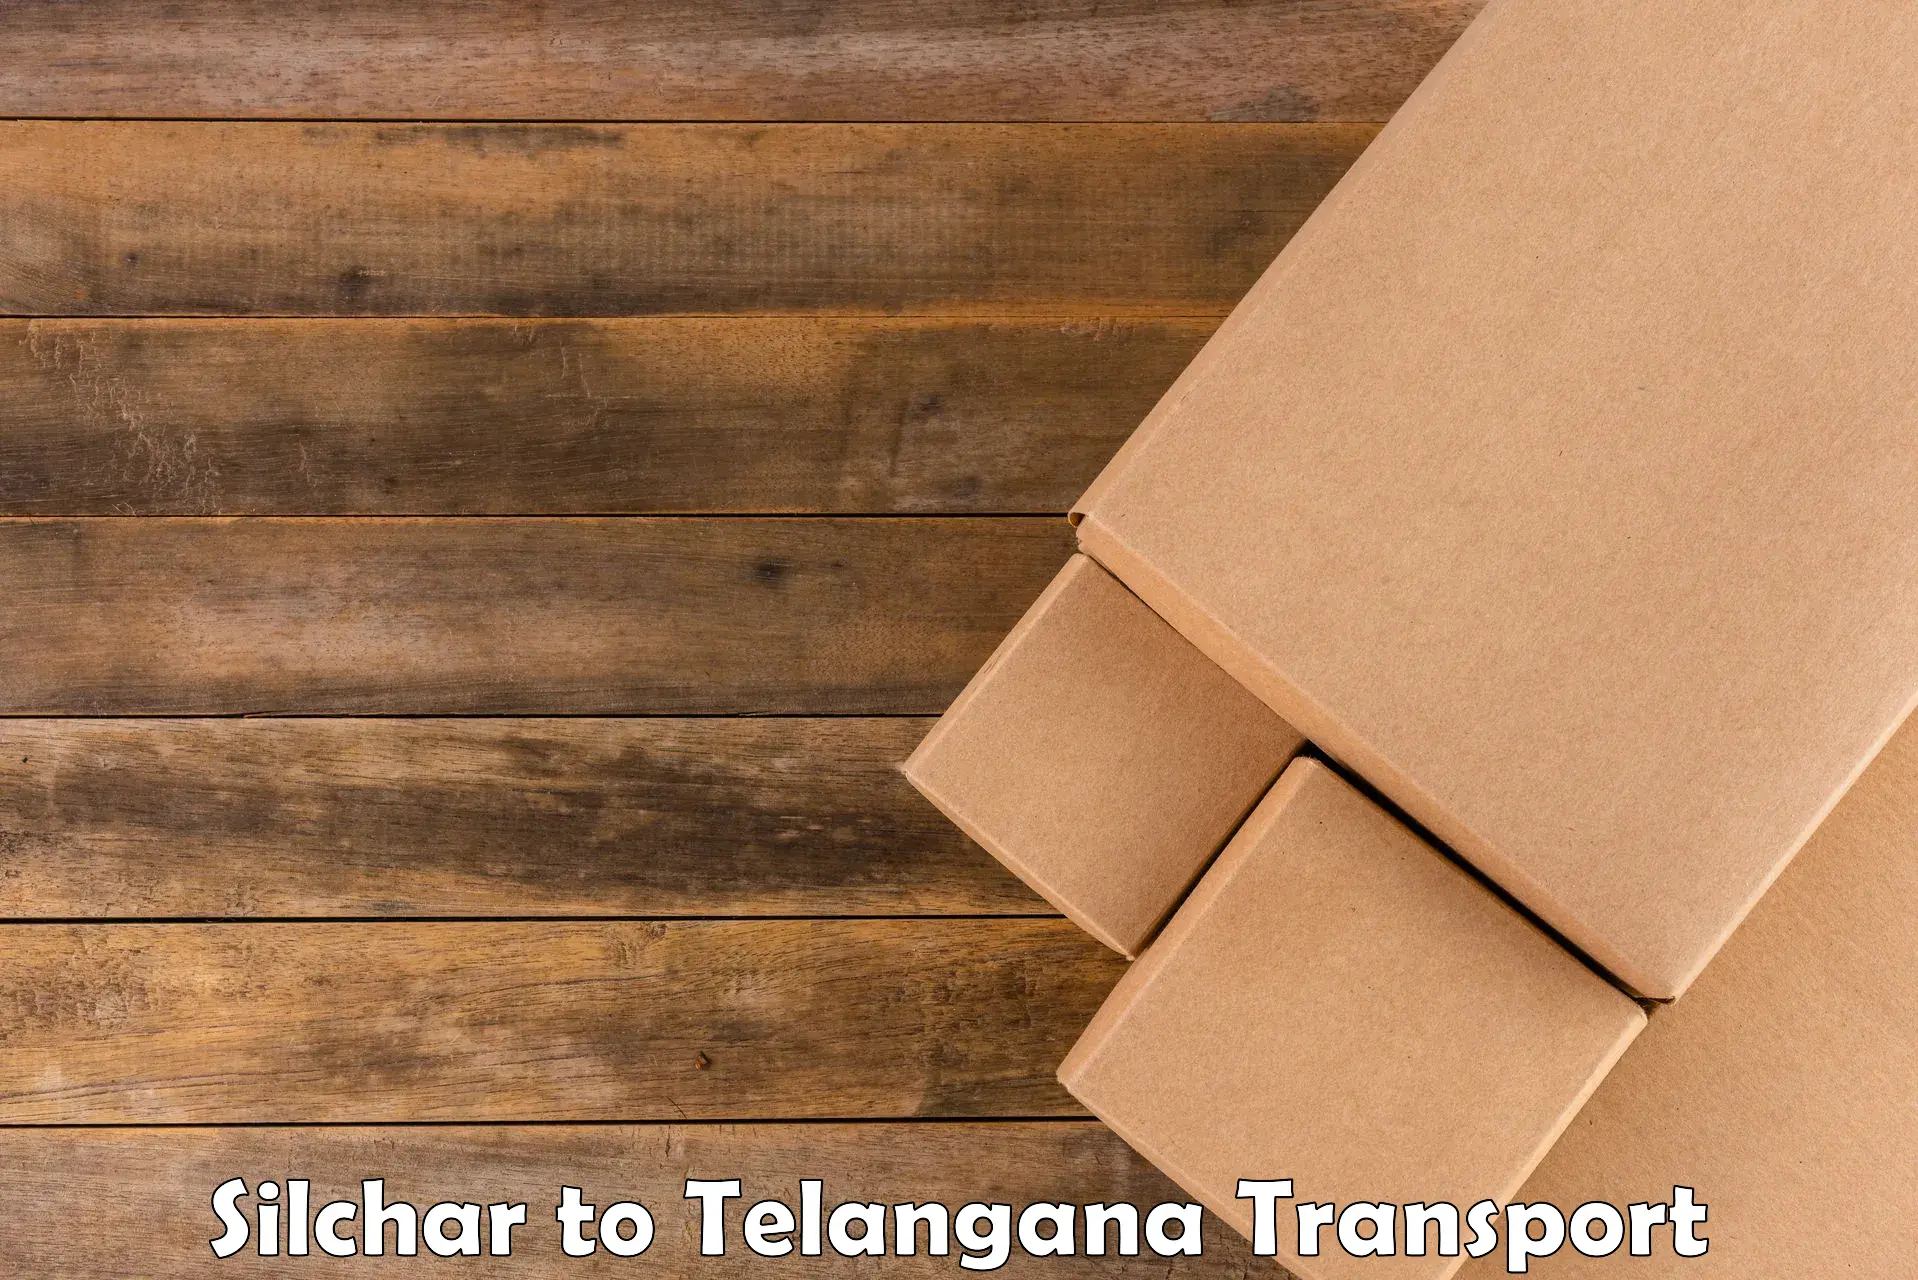 Transport in sharing Silchar to Kalwakurthy